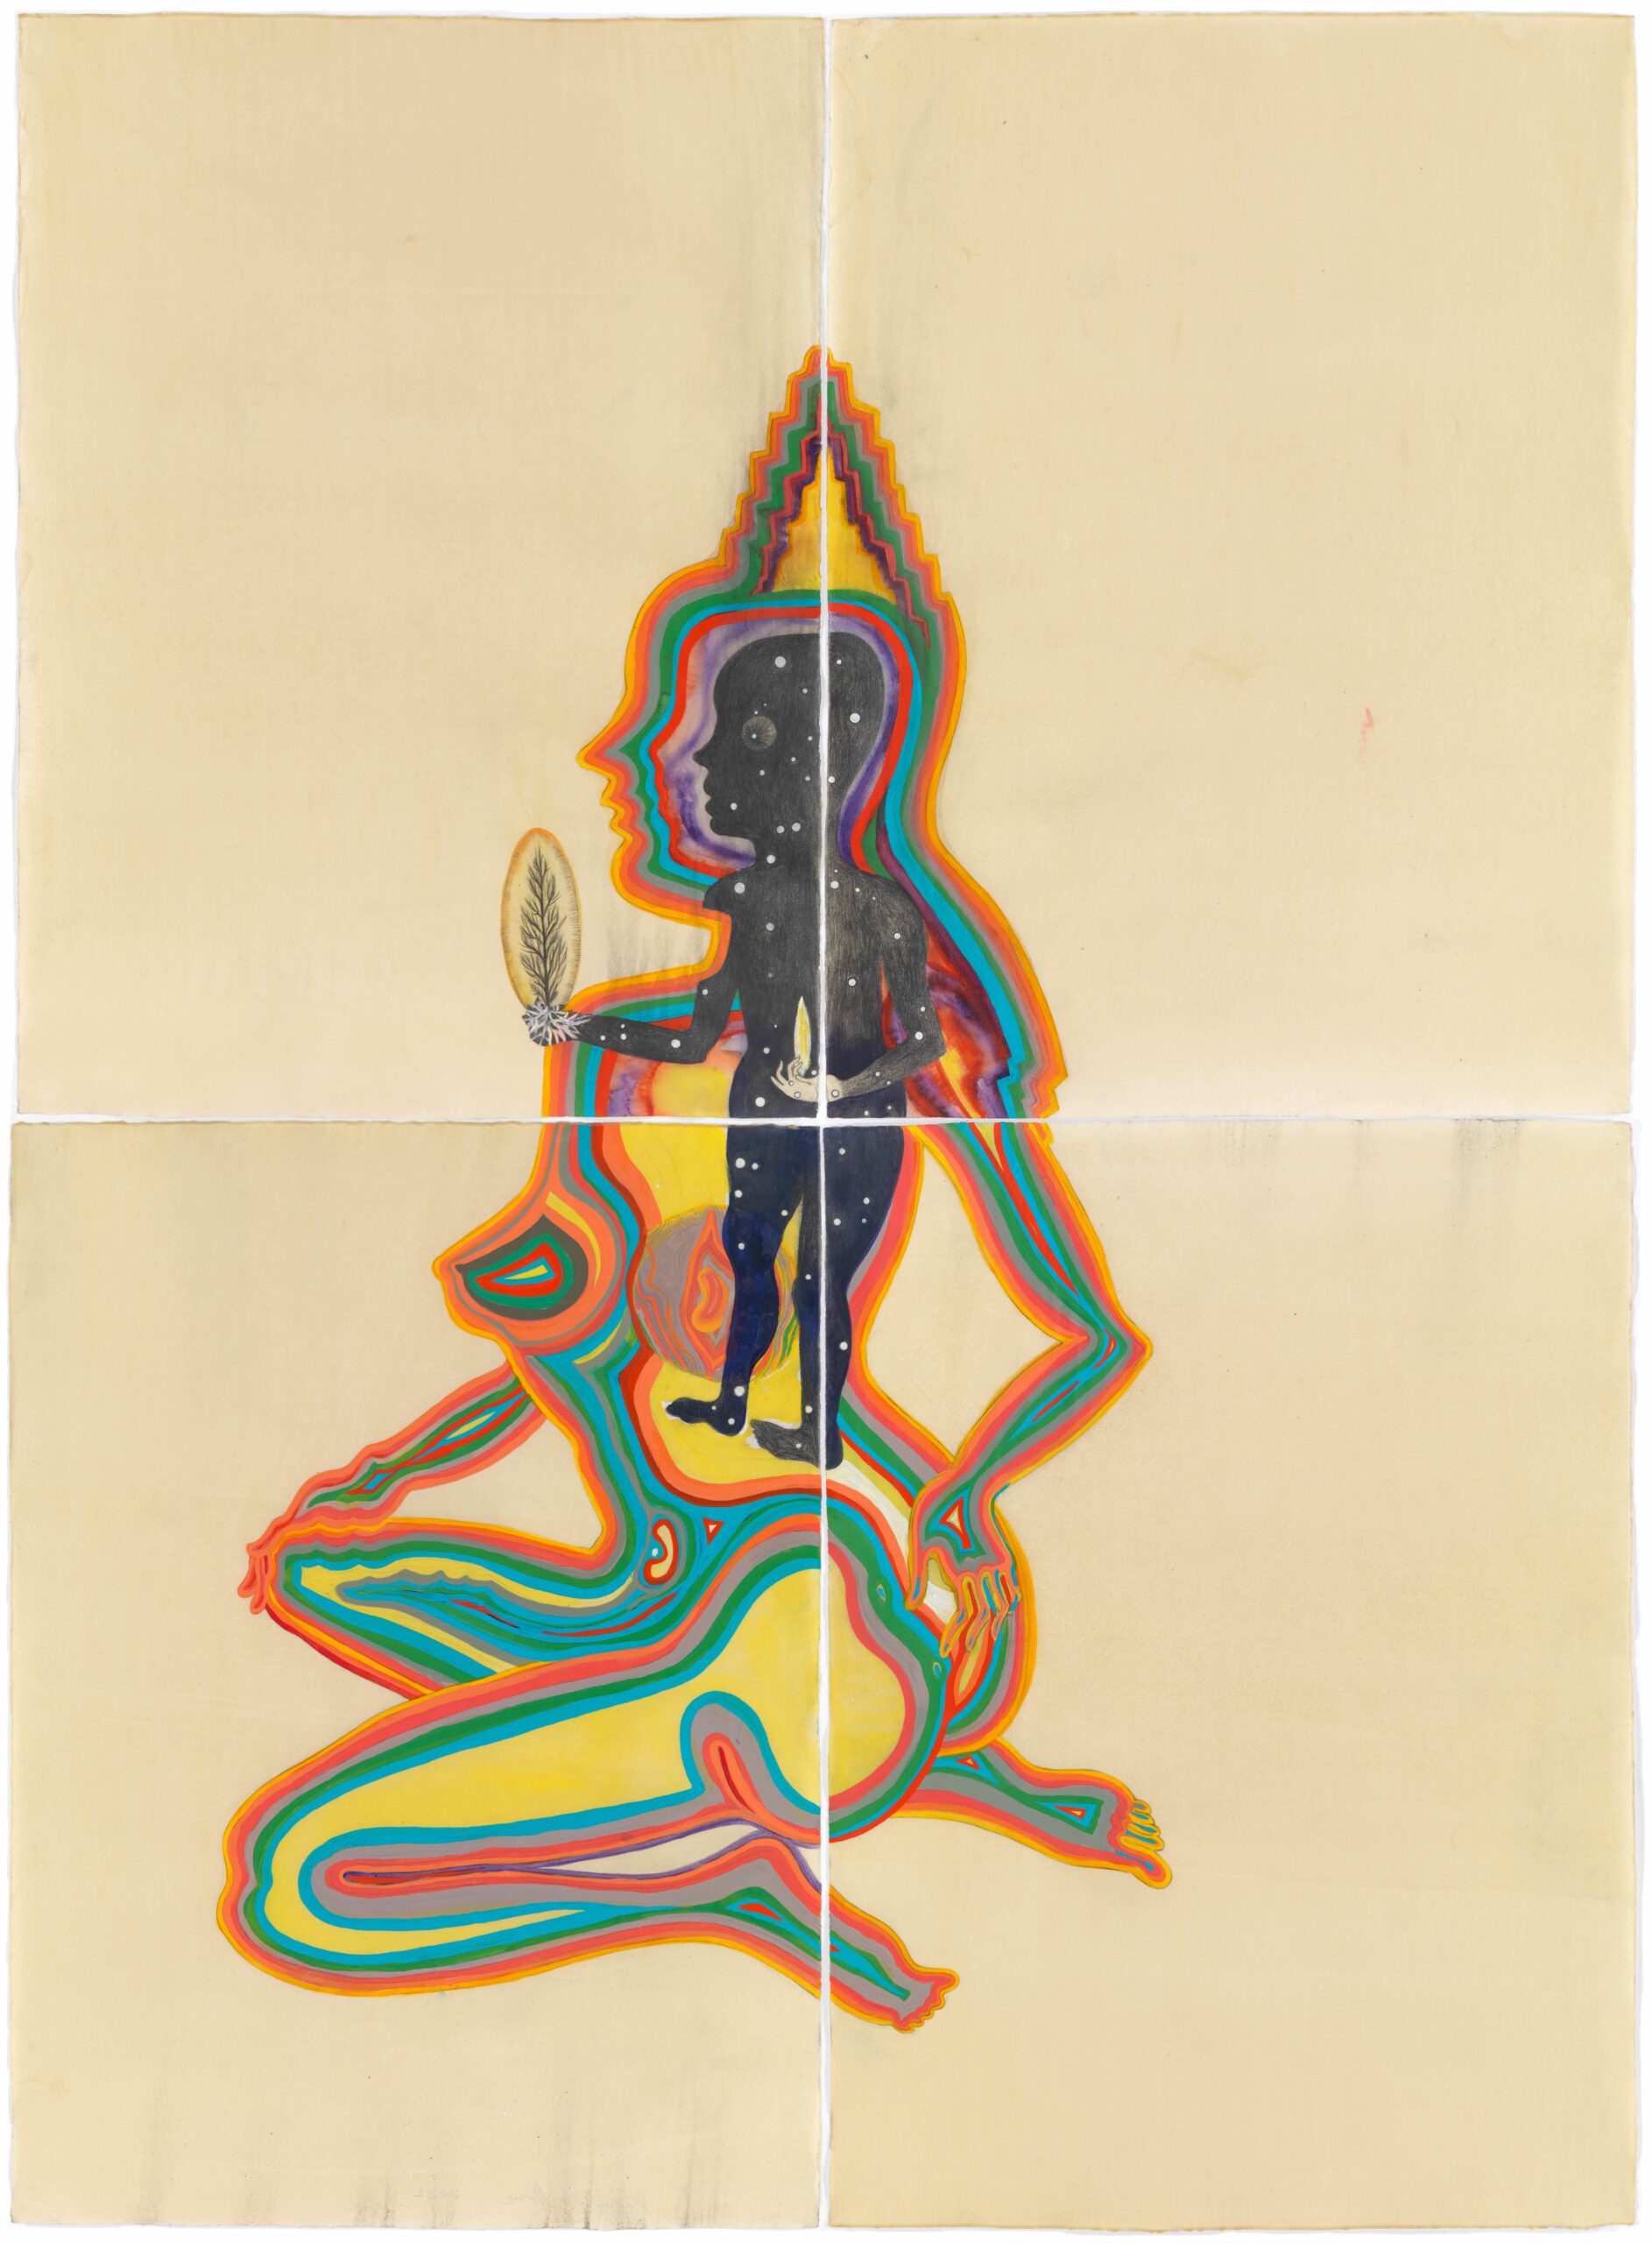 Sandra Vásquez de la Horra, Niño Cielo Estrellado, 2022, watercolor, gouache, graphite on paper dripped in beeswax, 211 x 157 cm (4 parts) © Lea Gryze, courtesy of the artist and Galerie Haas Zürich